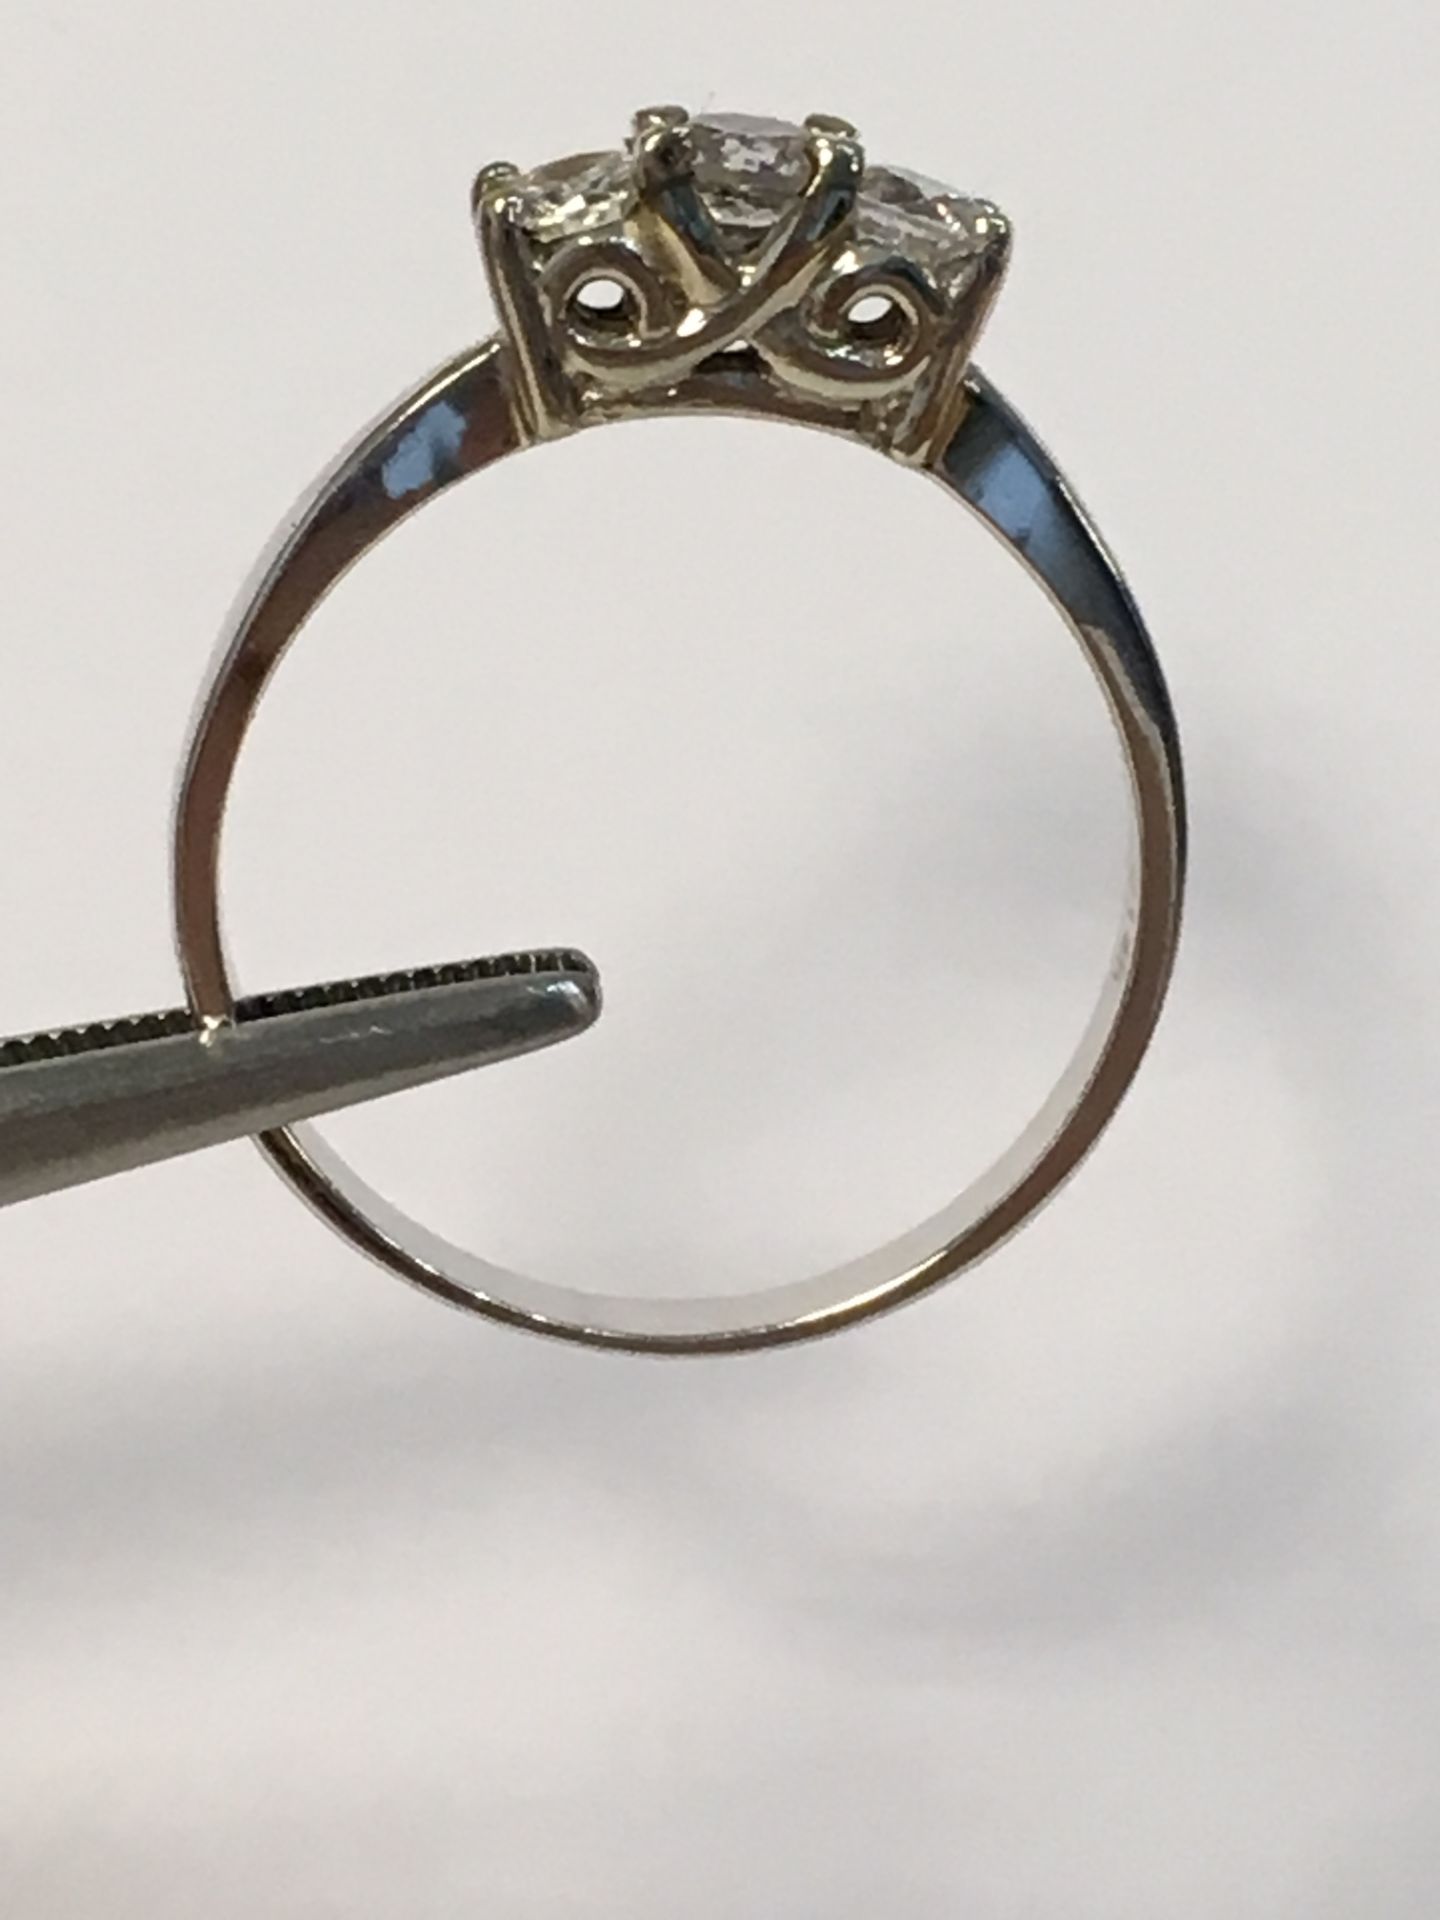 14K White Gold Engagement Ring with 3 set diamonds Hallmarked - Image 3 of 3